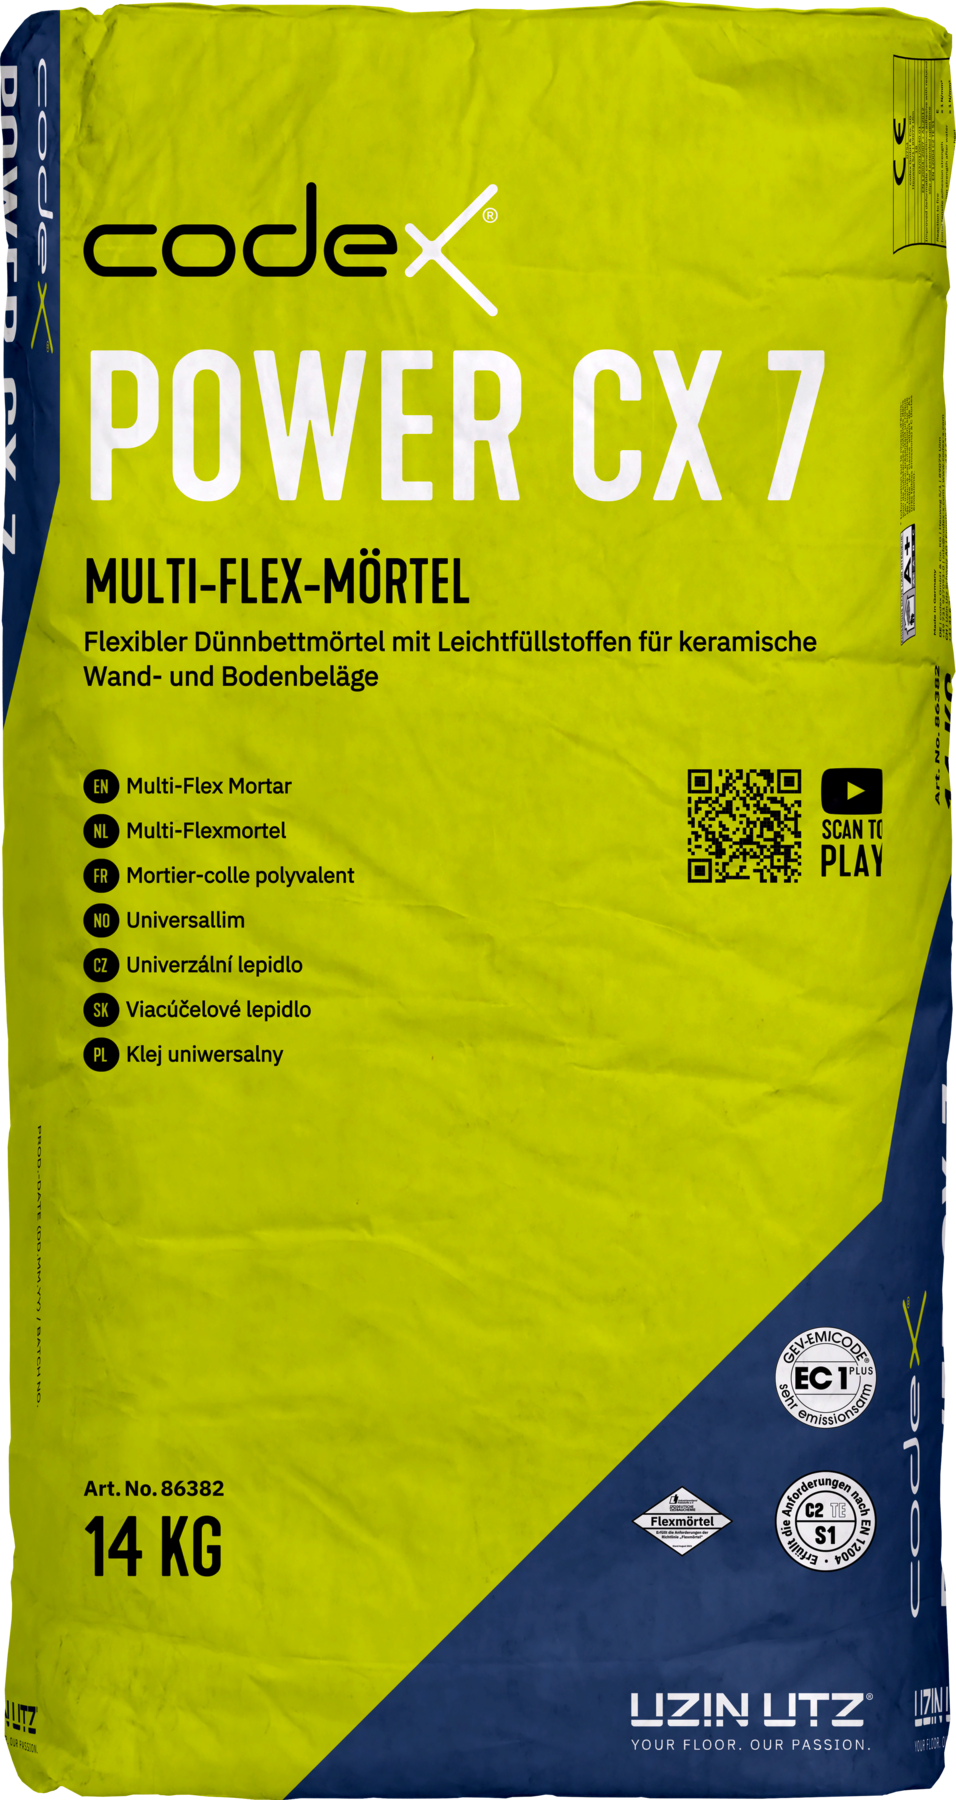 Codex Power CX 7 14 kg Multi-Flex-Mörtel